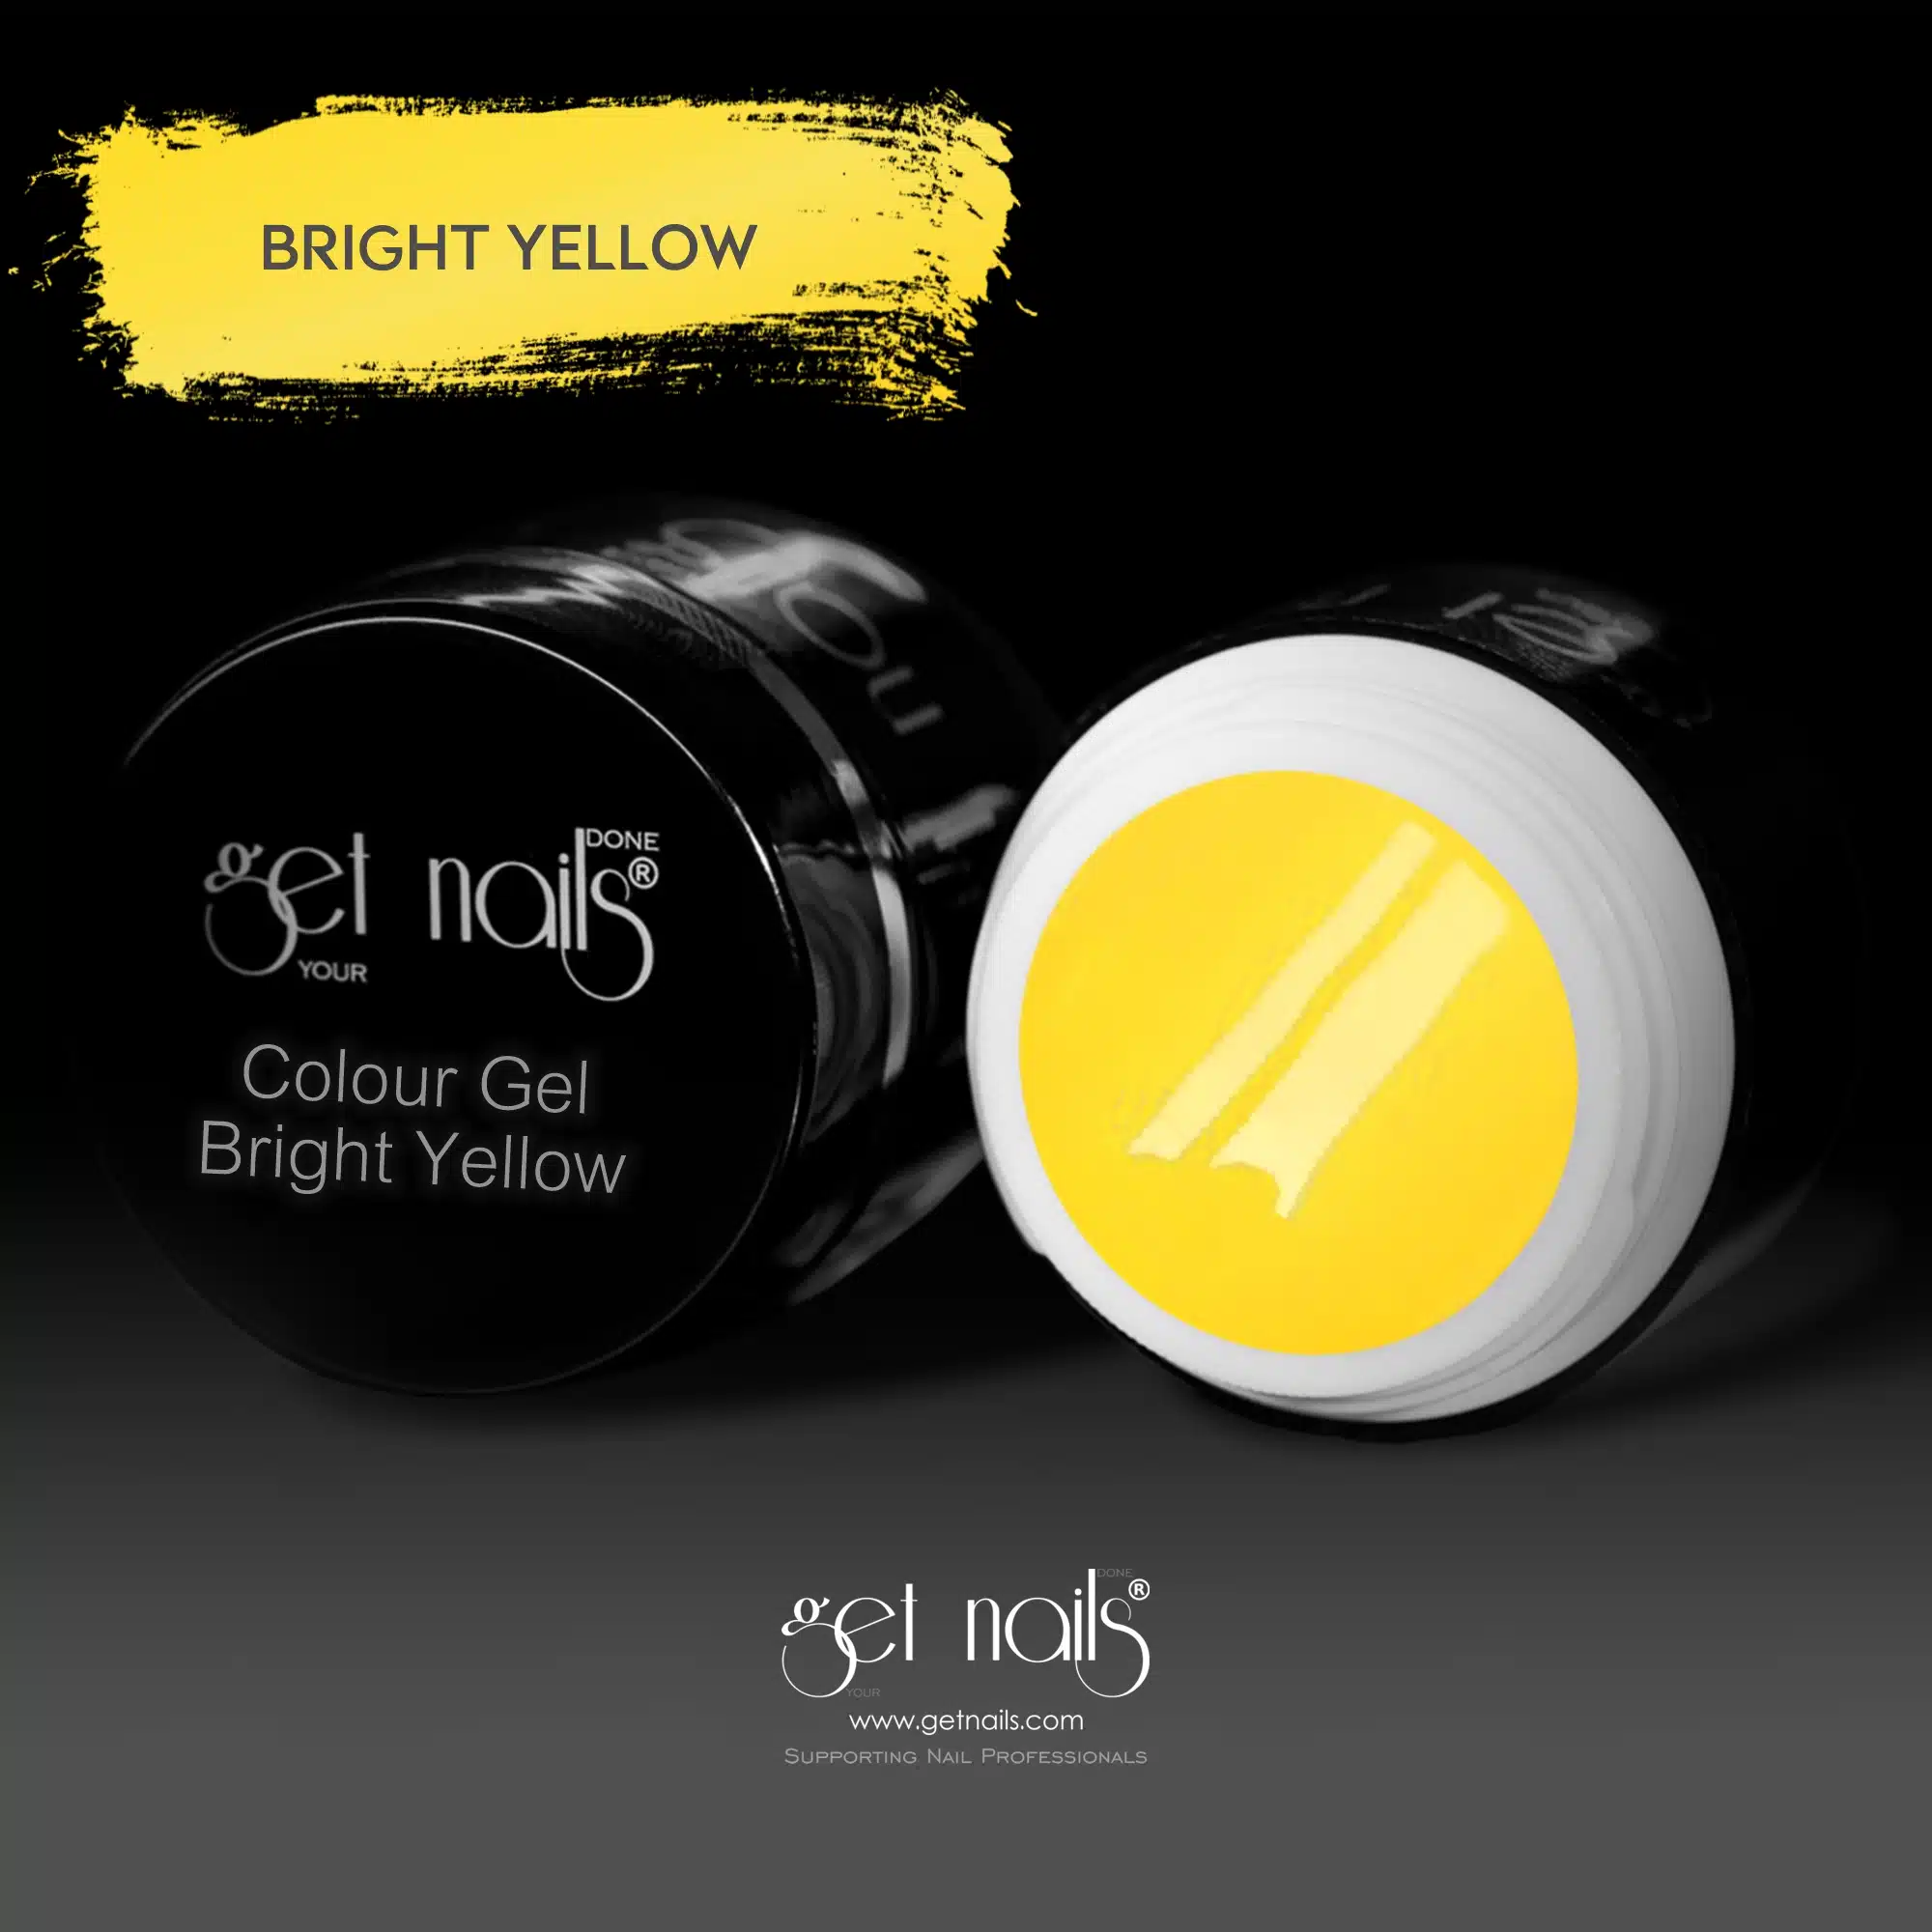 Get Nails Austria - Color Gel Bright Yellow 5g